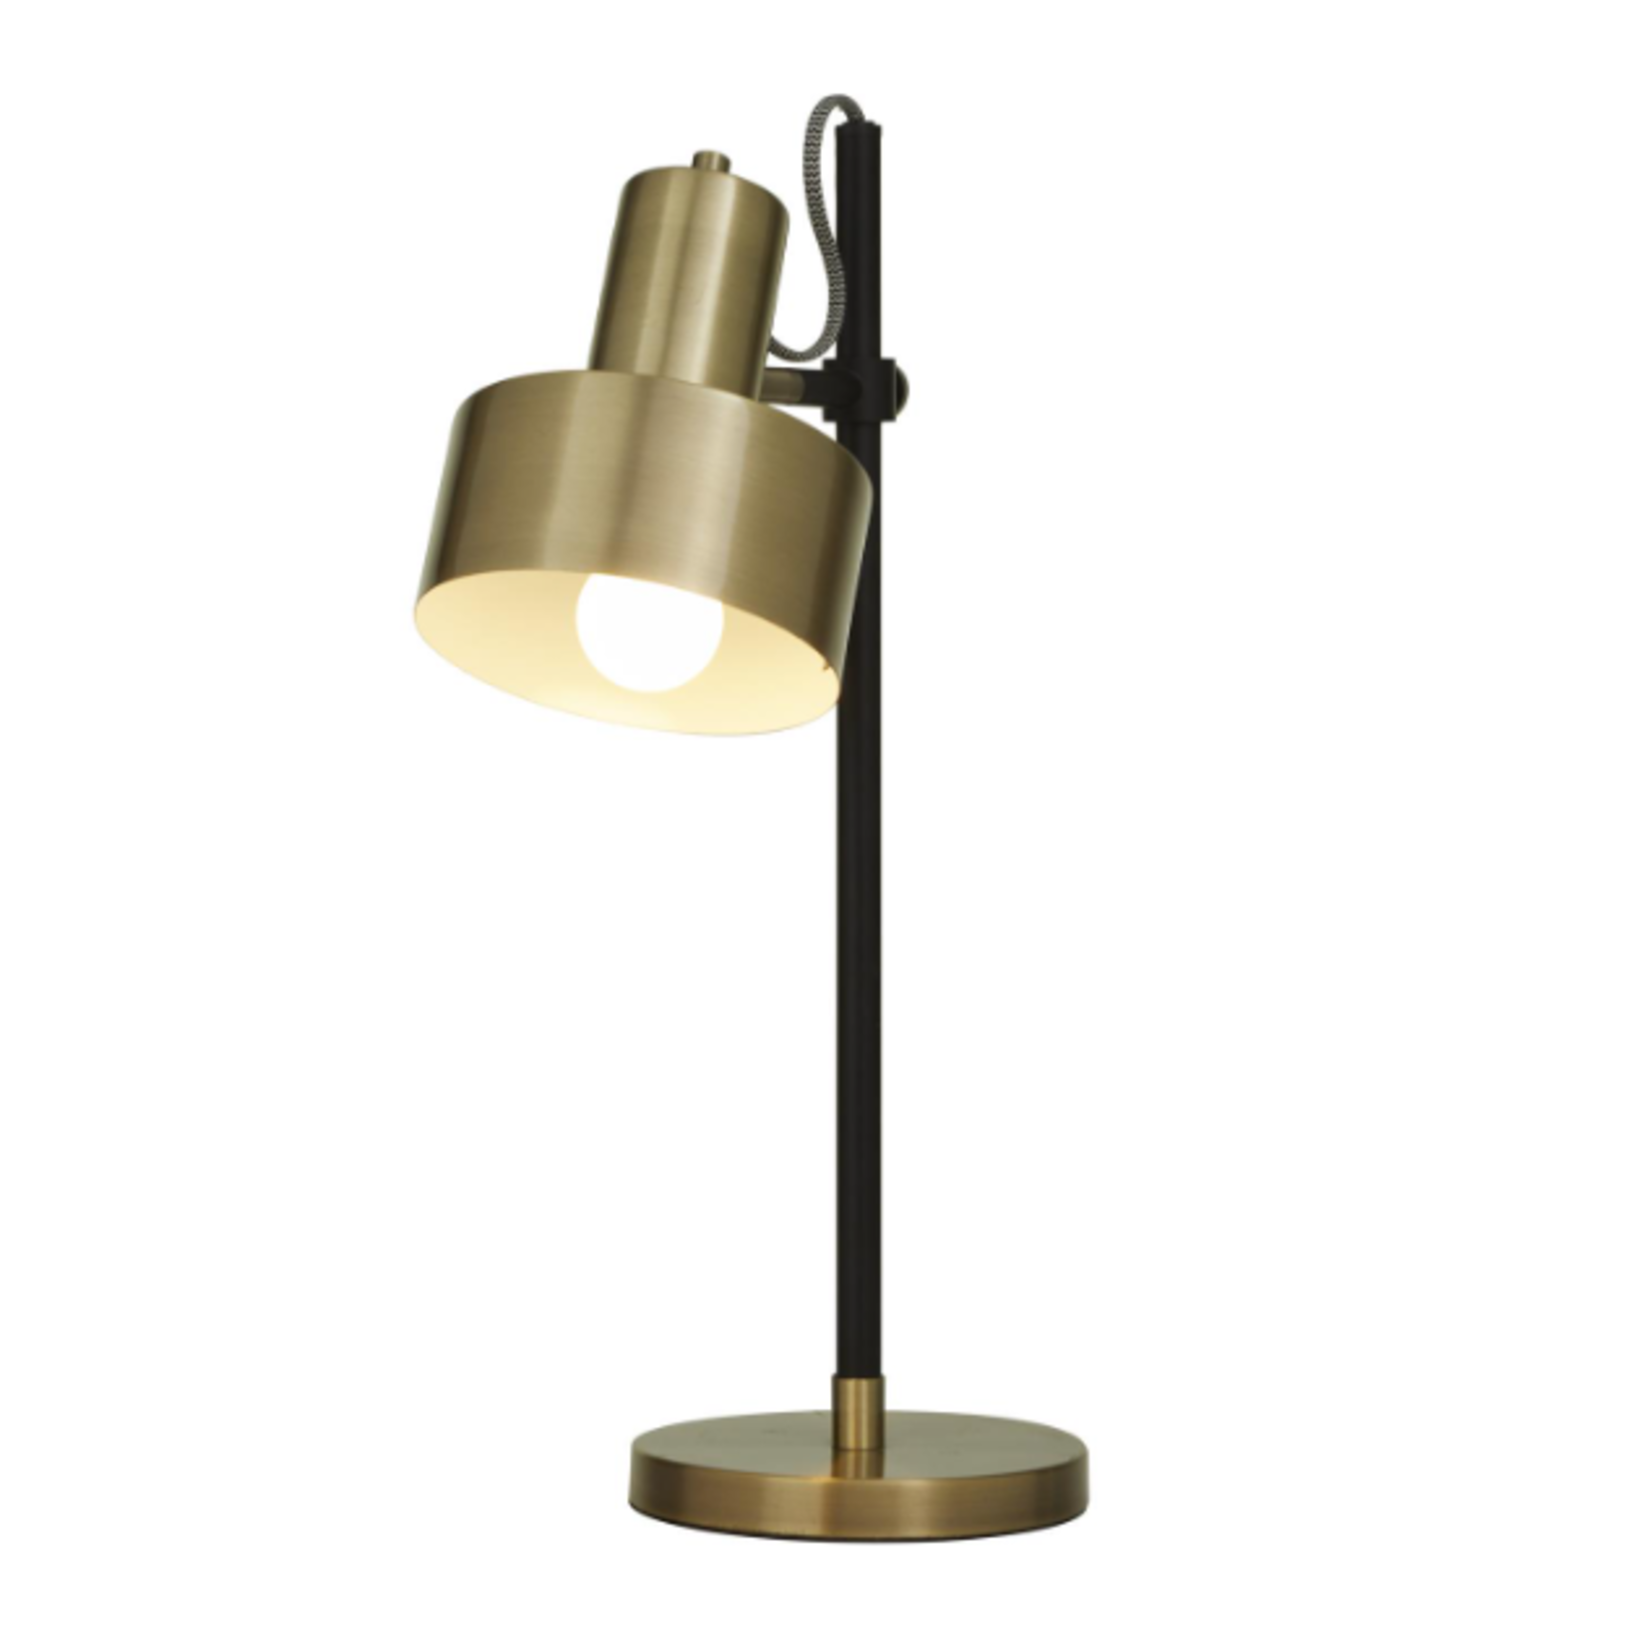 Mickler & Co. Spotlight Desk Lamp